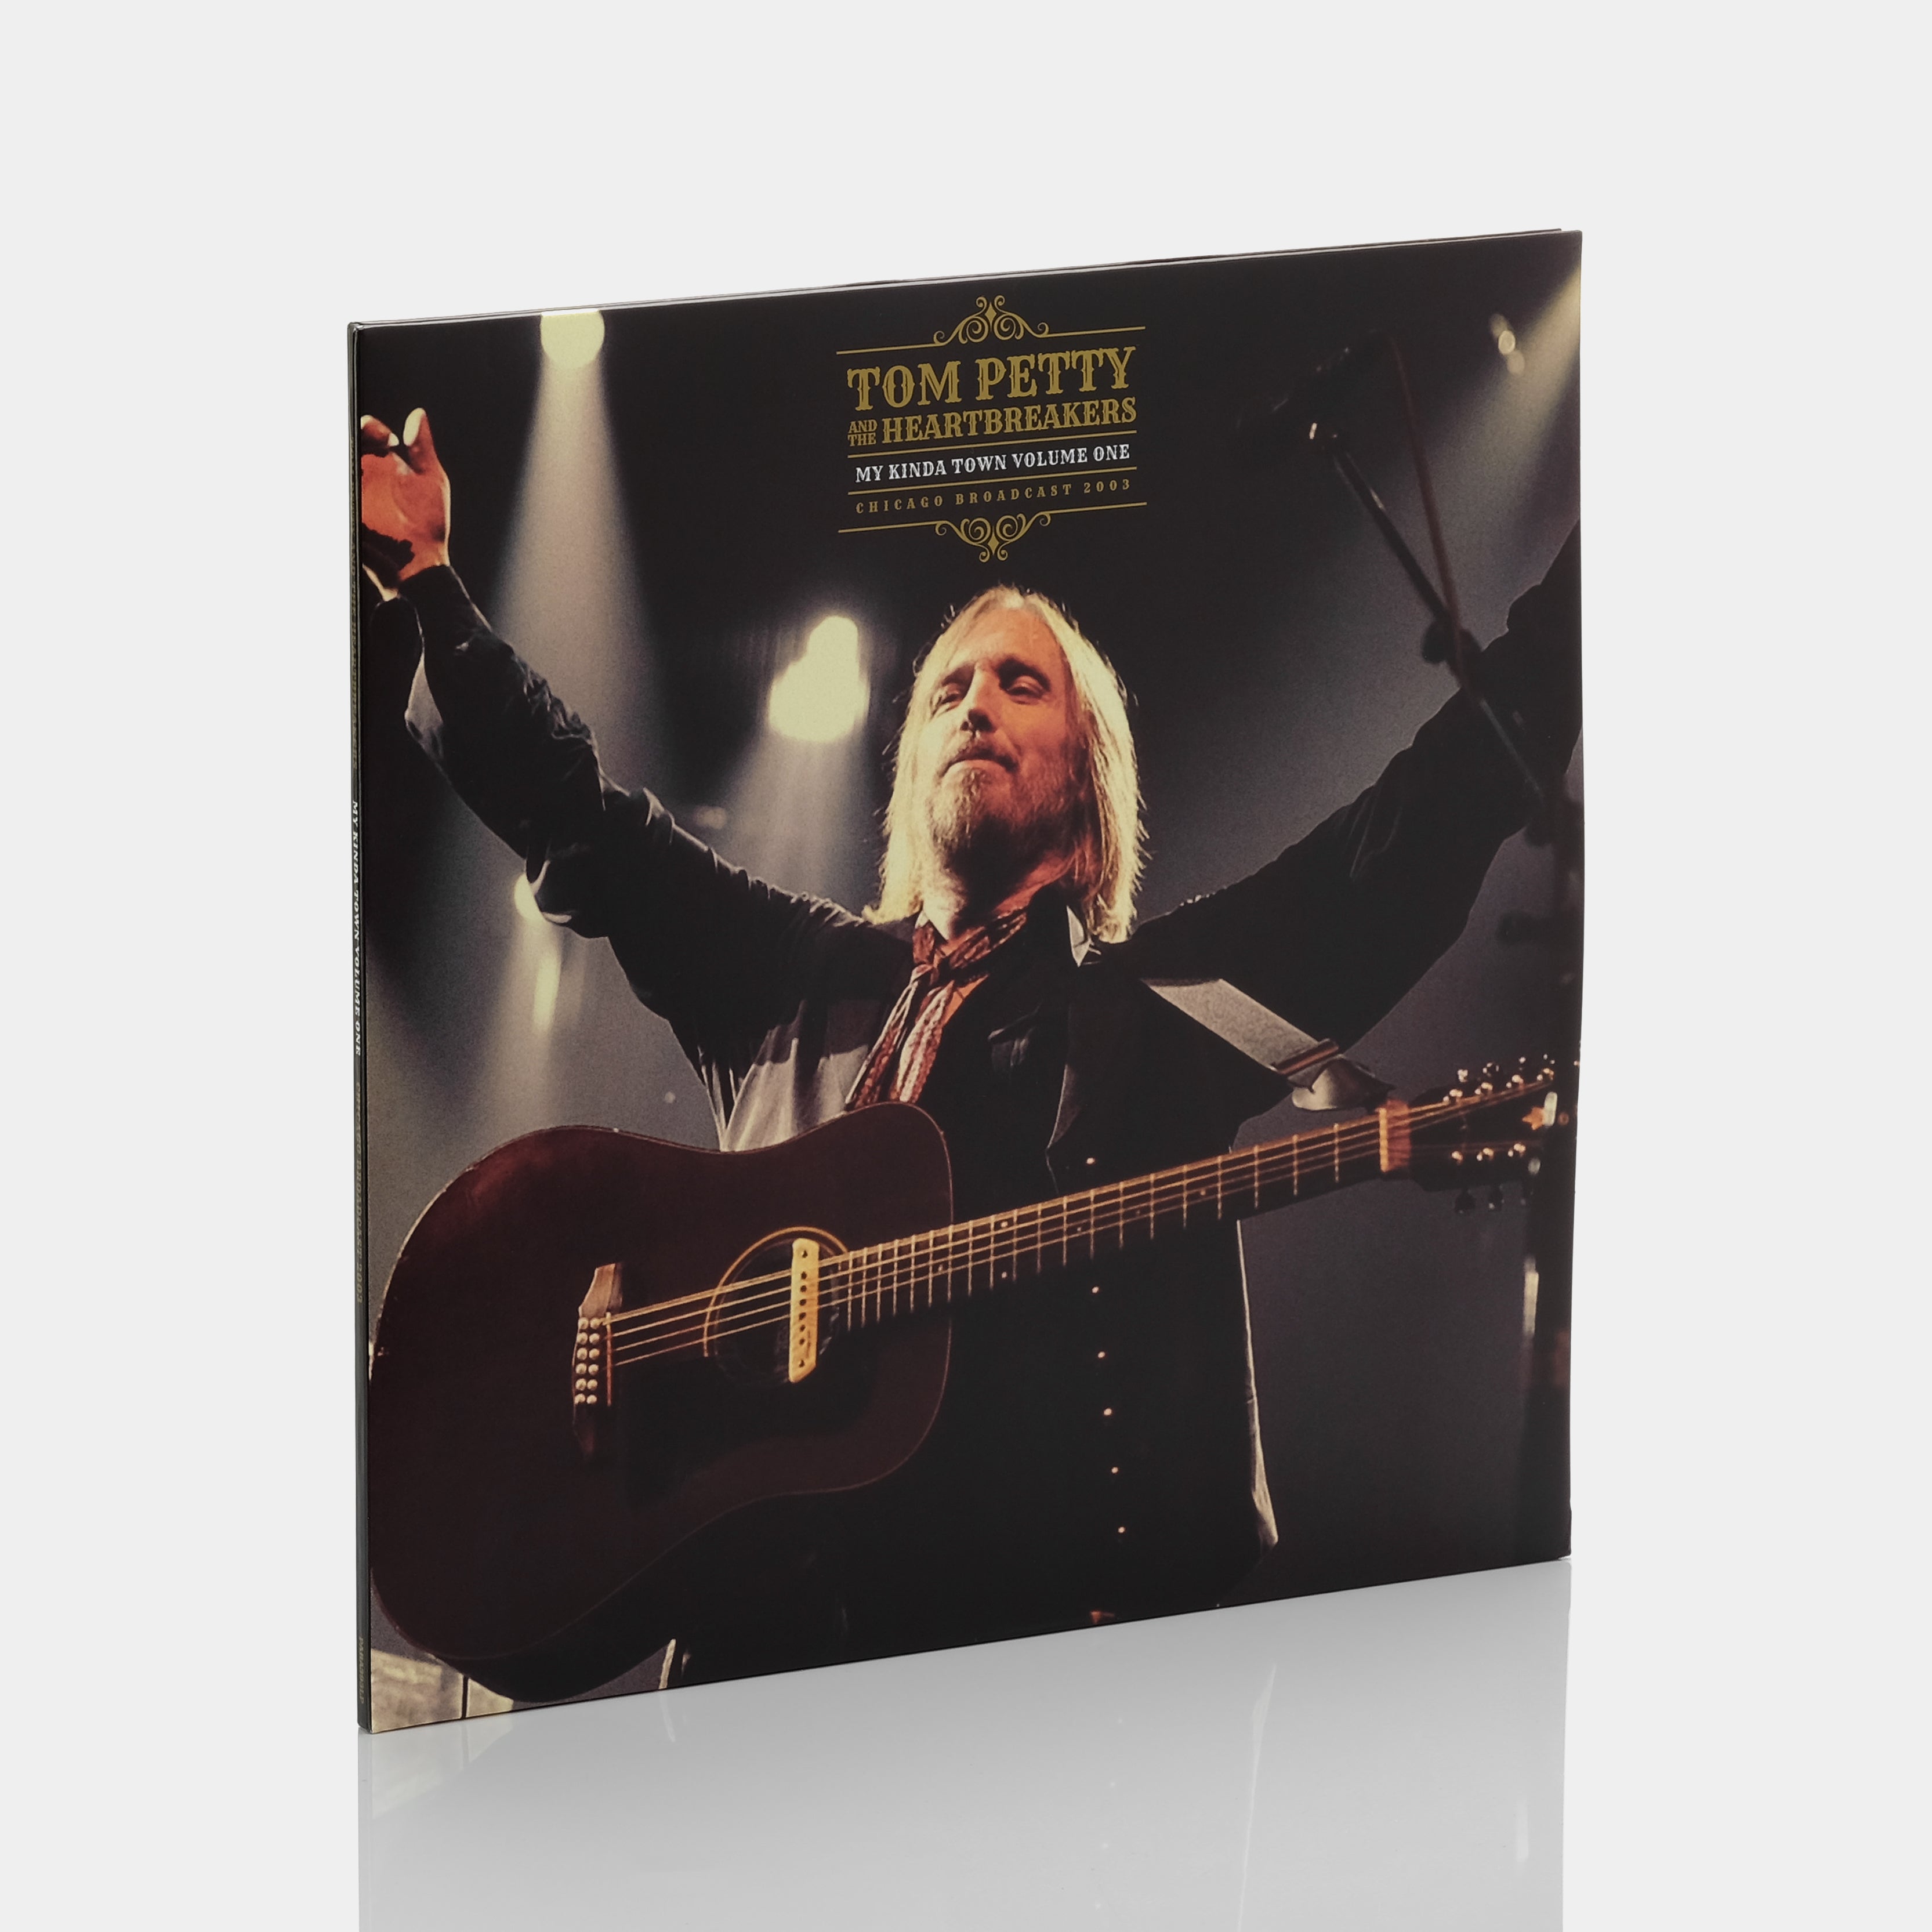 Tom Petty - Heartbreakers (My Kinda Town Volume One, Chicago Broadcast 2003) 2xLP Vinyl Record